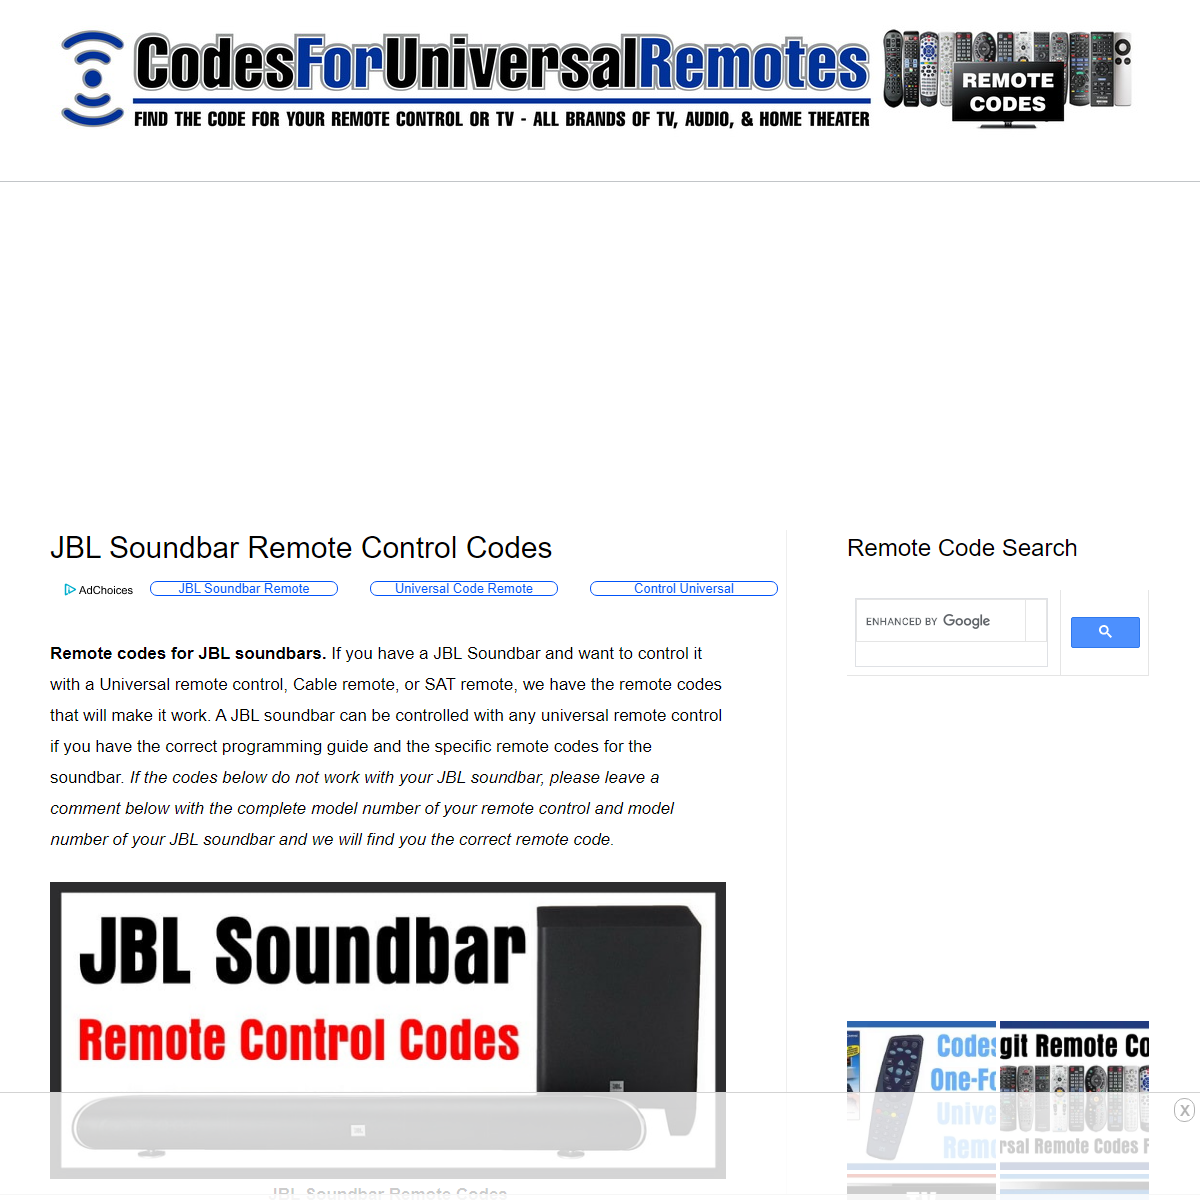 JBL Soundbar Remote Control Codes - Codes For Universal Remotes